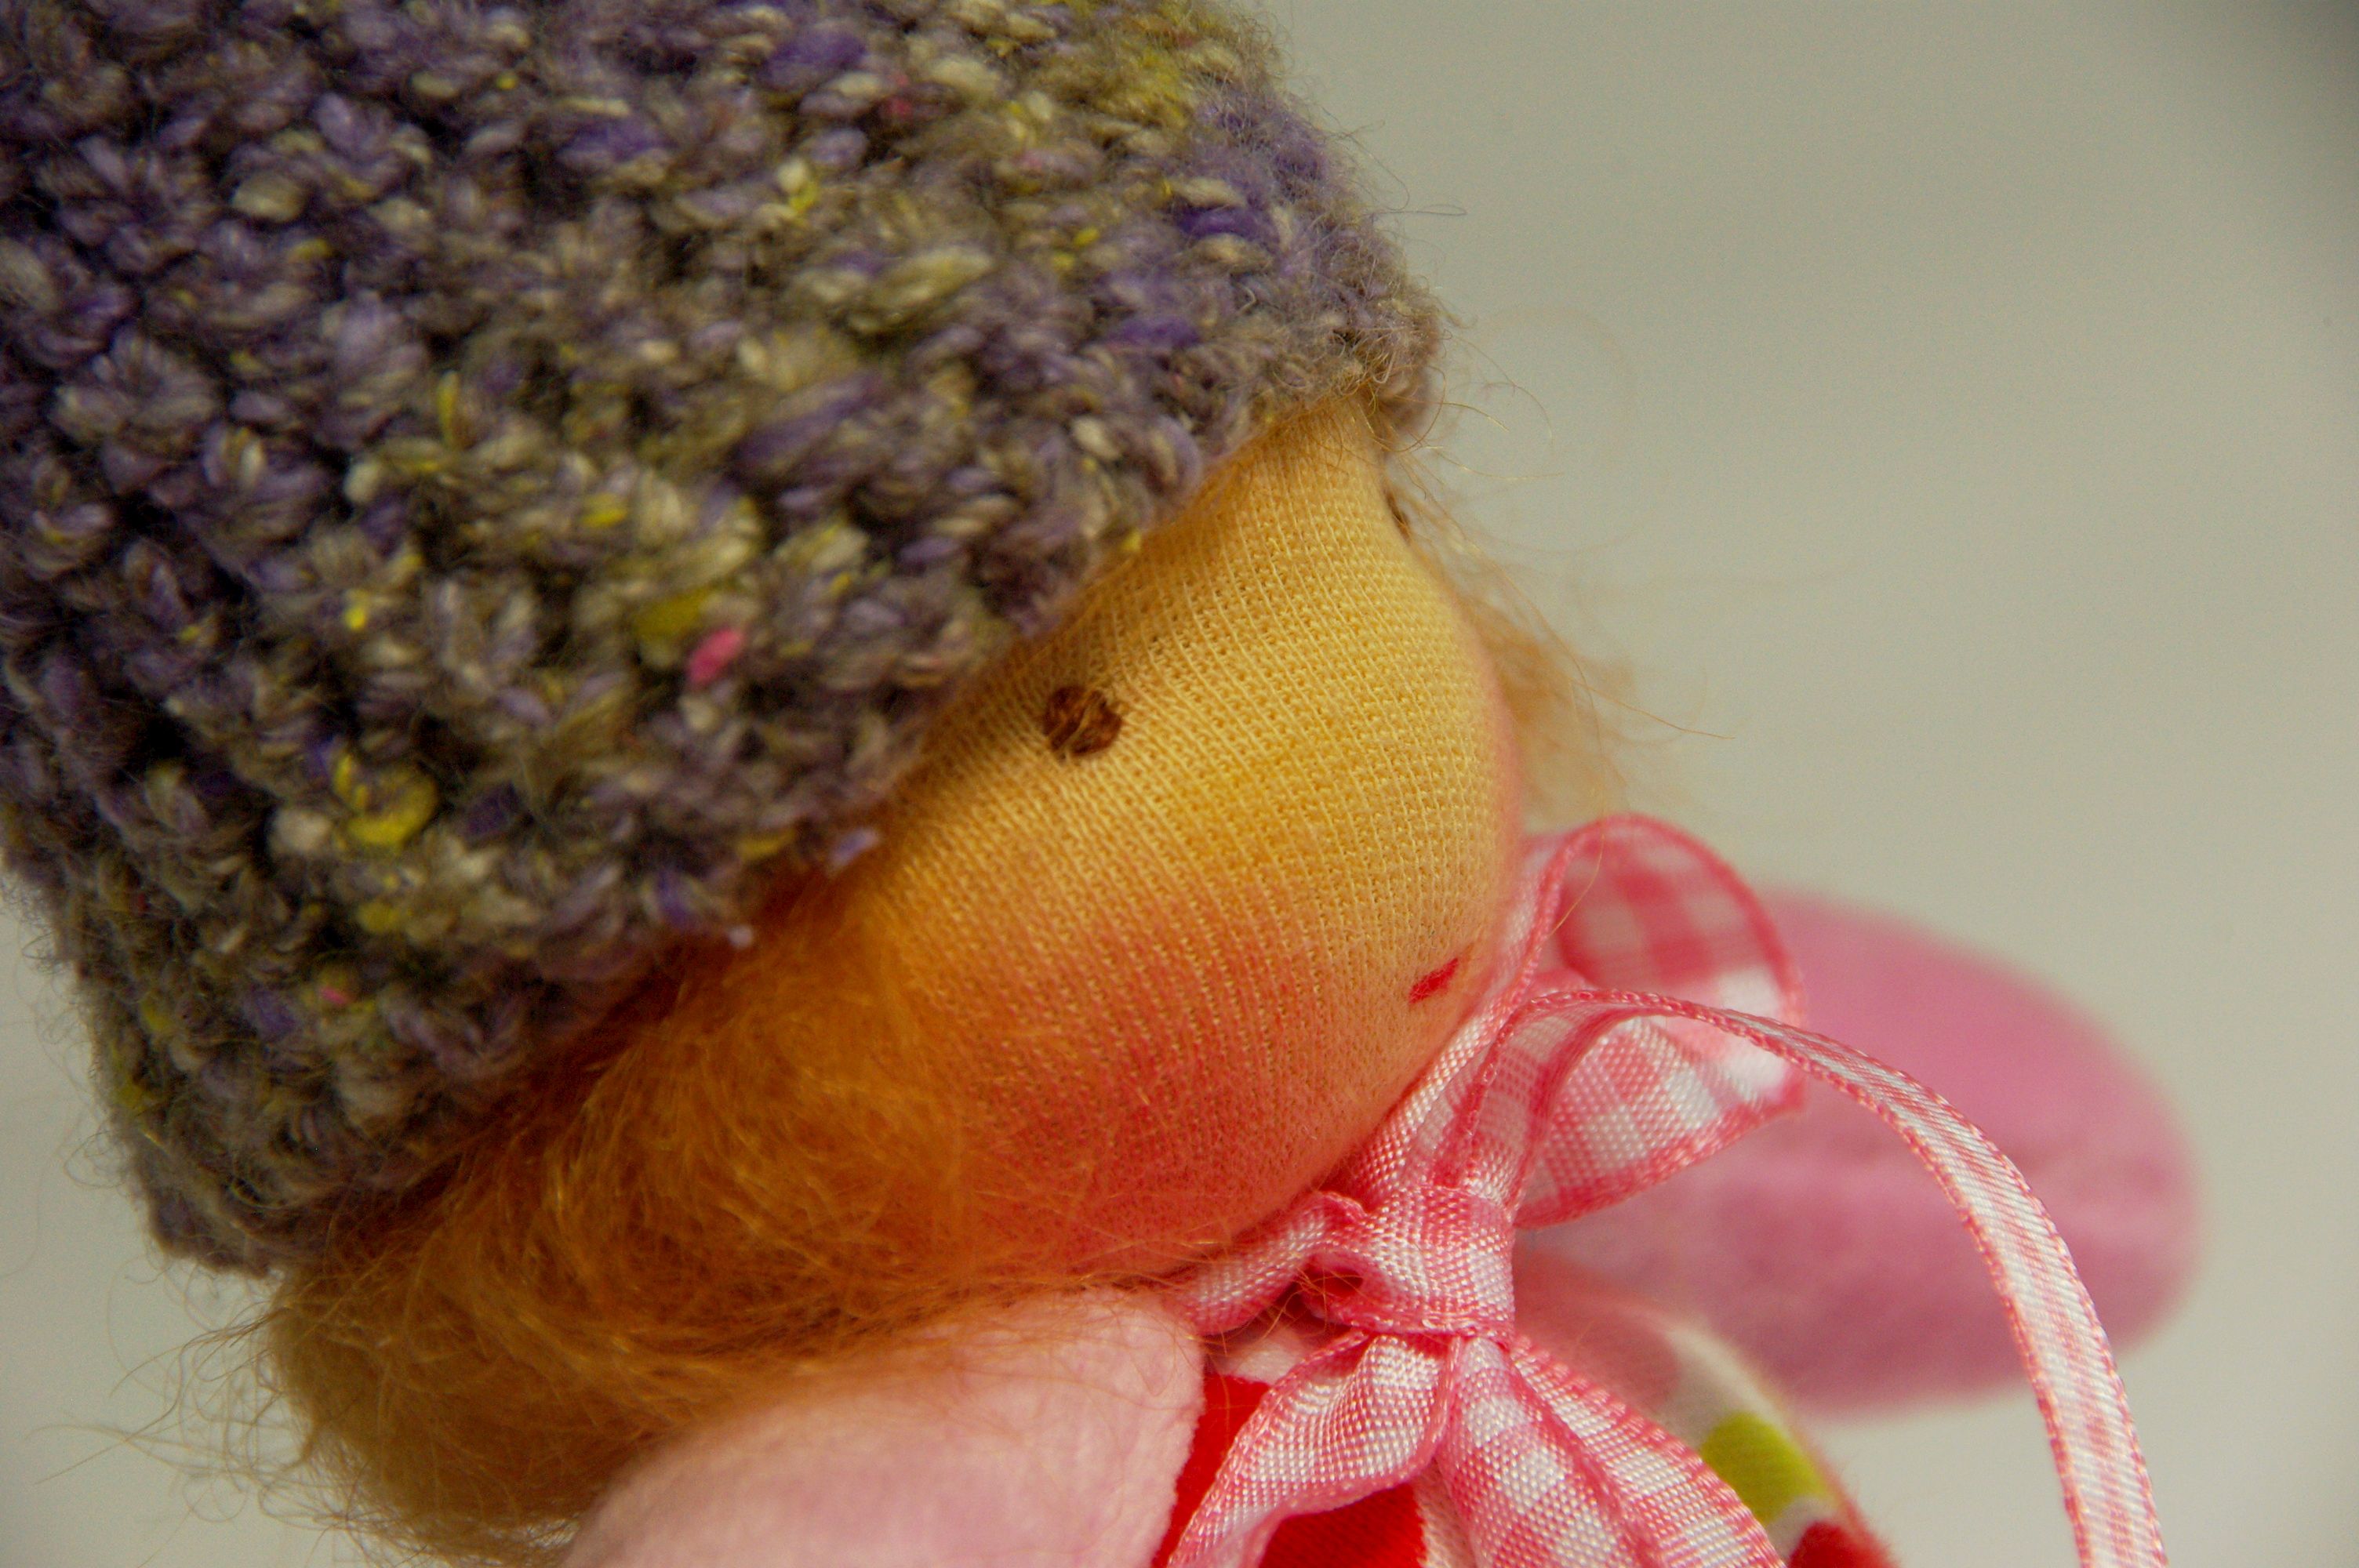 Apple baby dolls by Atelier Lavendel. Handmade in Germany.